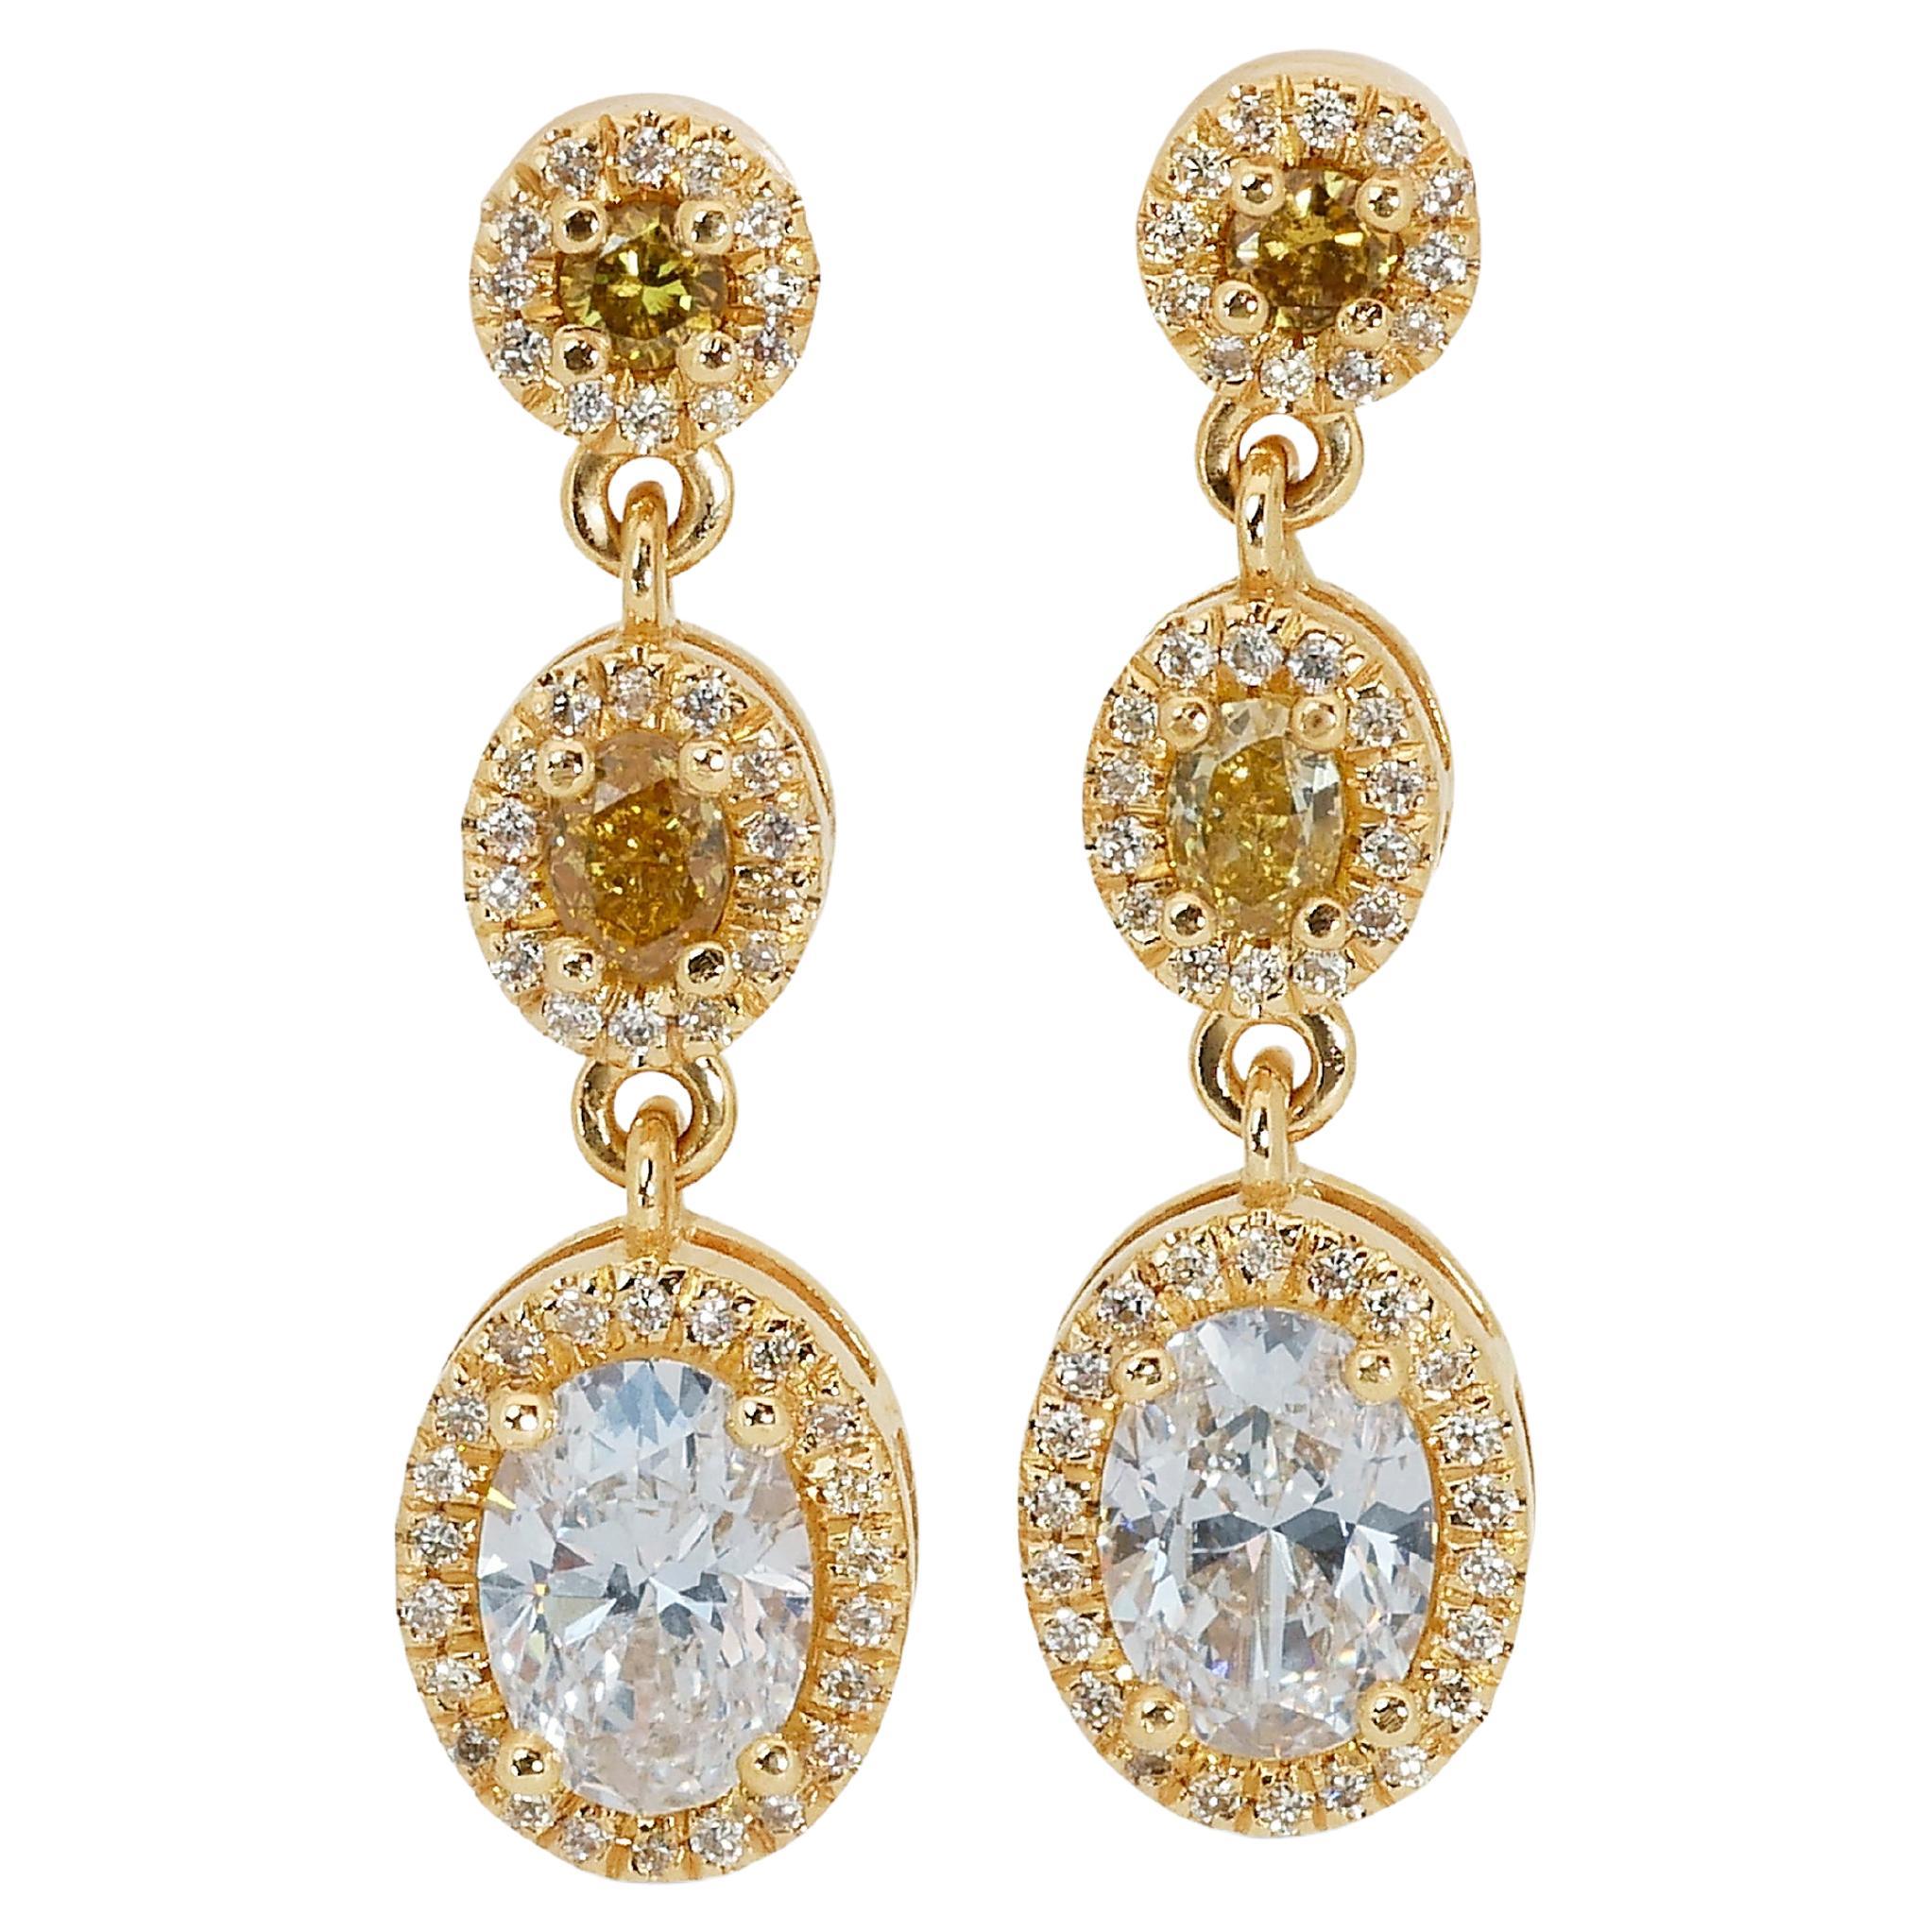 18k Yellow Gold Fancy Drop Earrings w/ 2.18 Carat Natural Diamonds IGI Cert